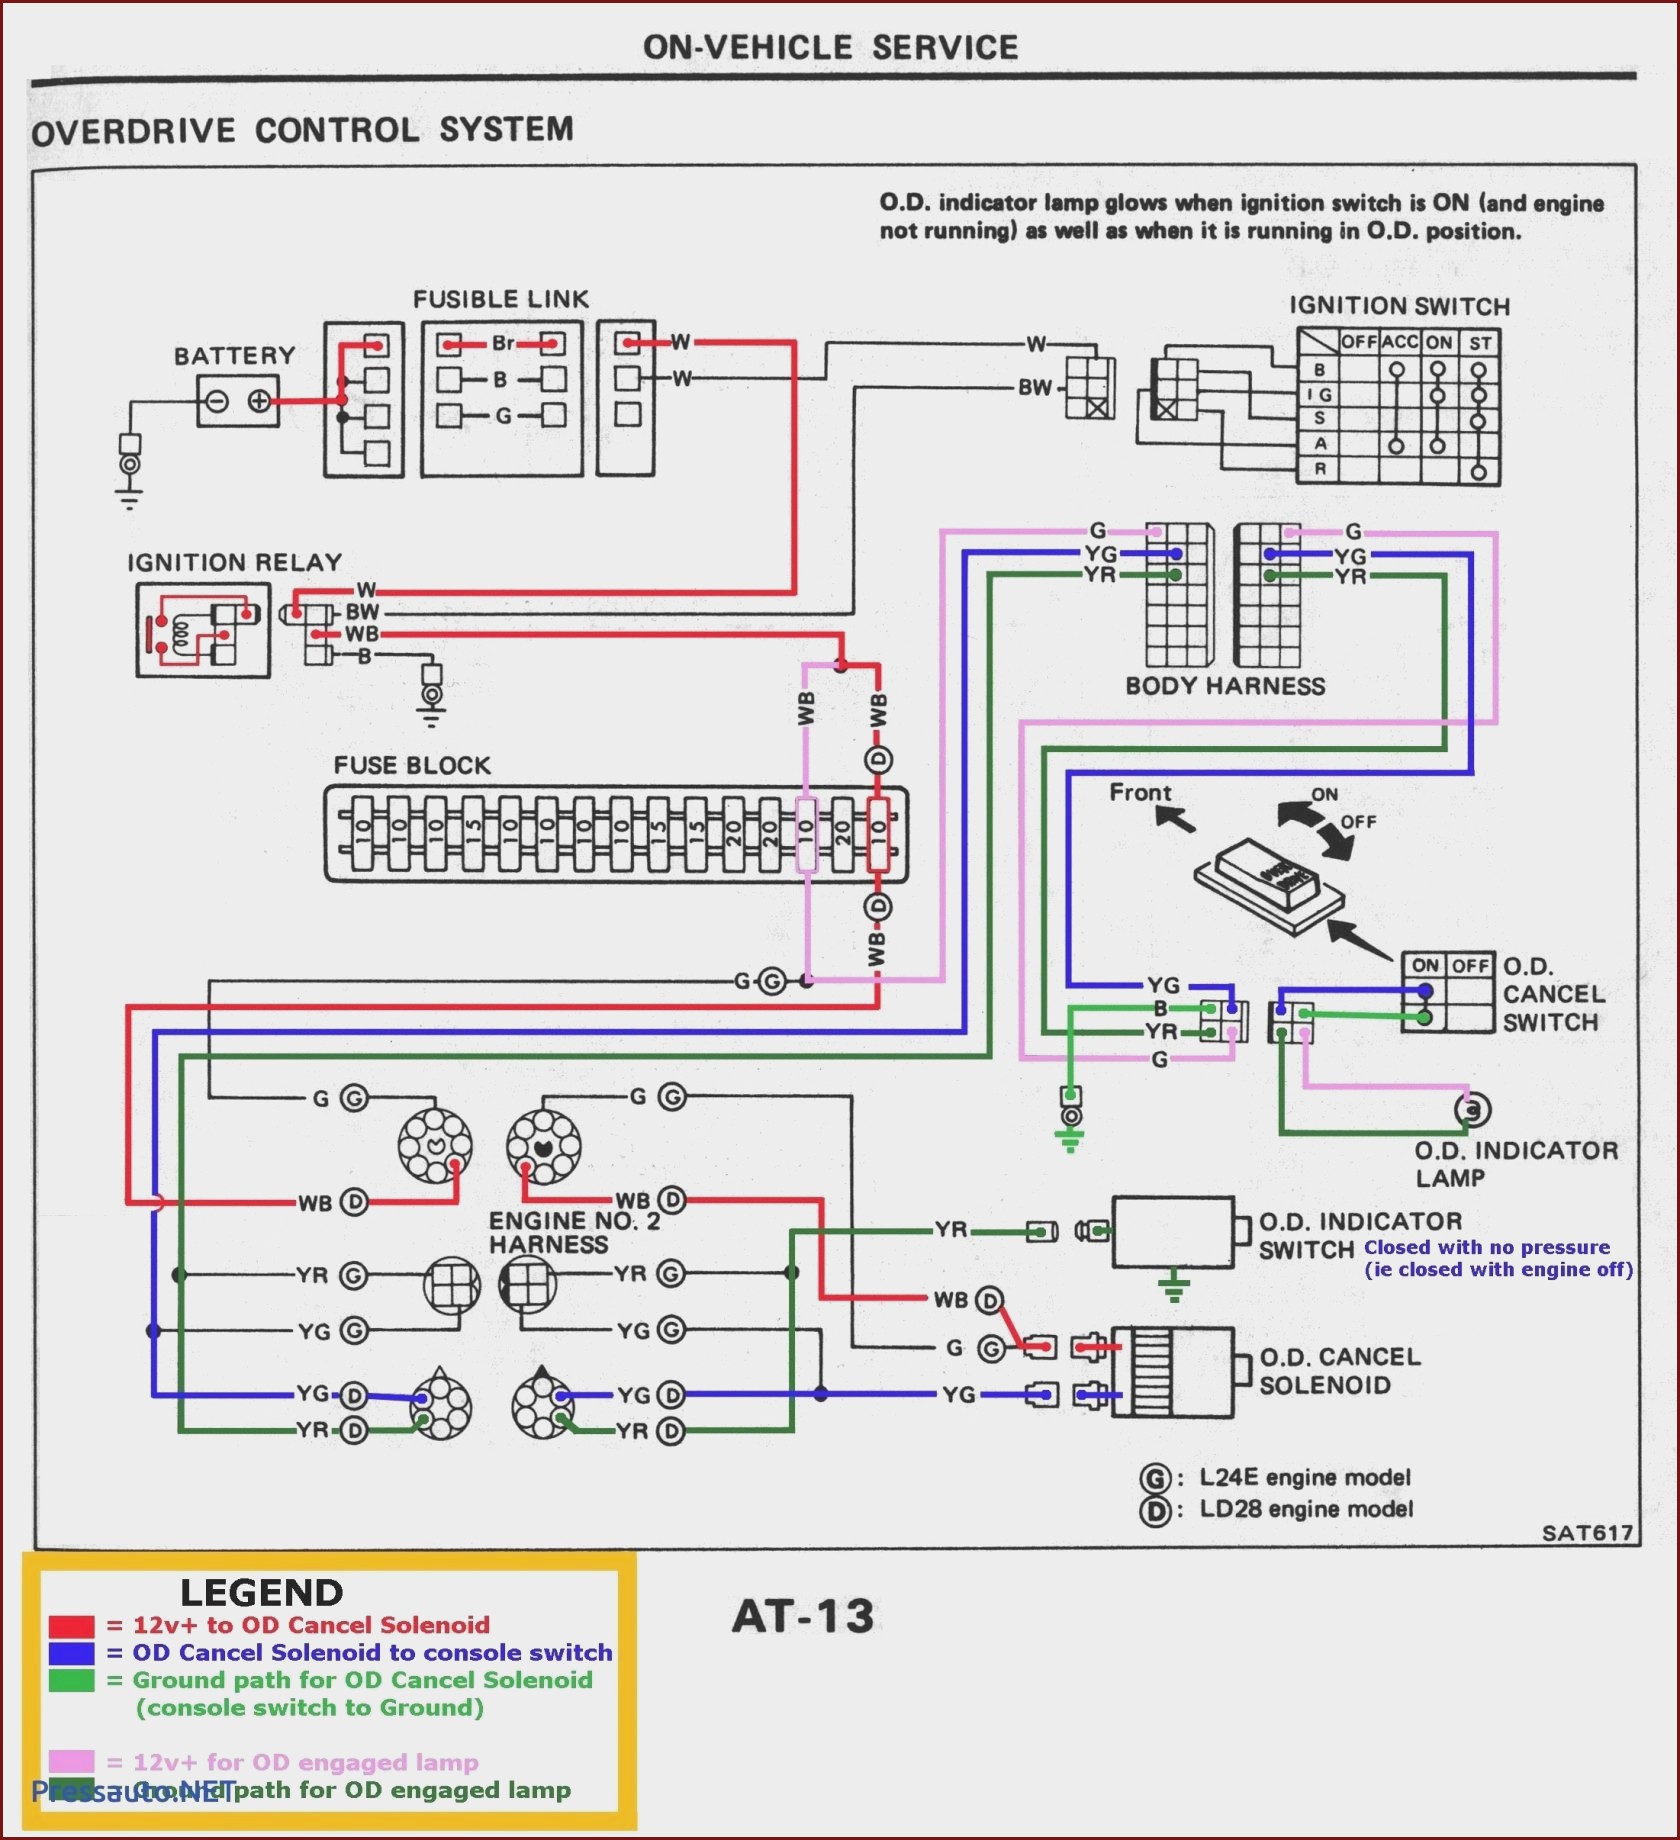 2005 Nissan Xterra Engine Diagram 1995 Nissan Pathfinder Starter Wiring Diagram at Manuals Library Of 2005 Nissan Xterra Engine Diagram